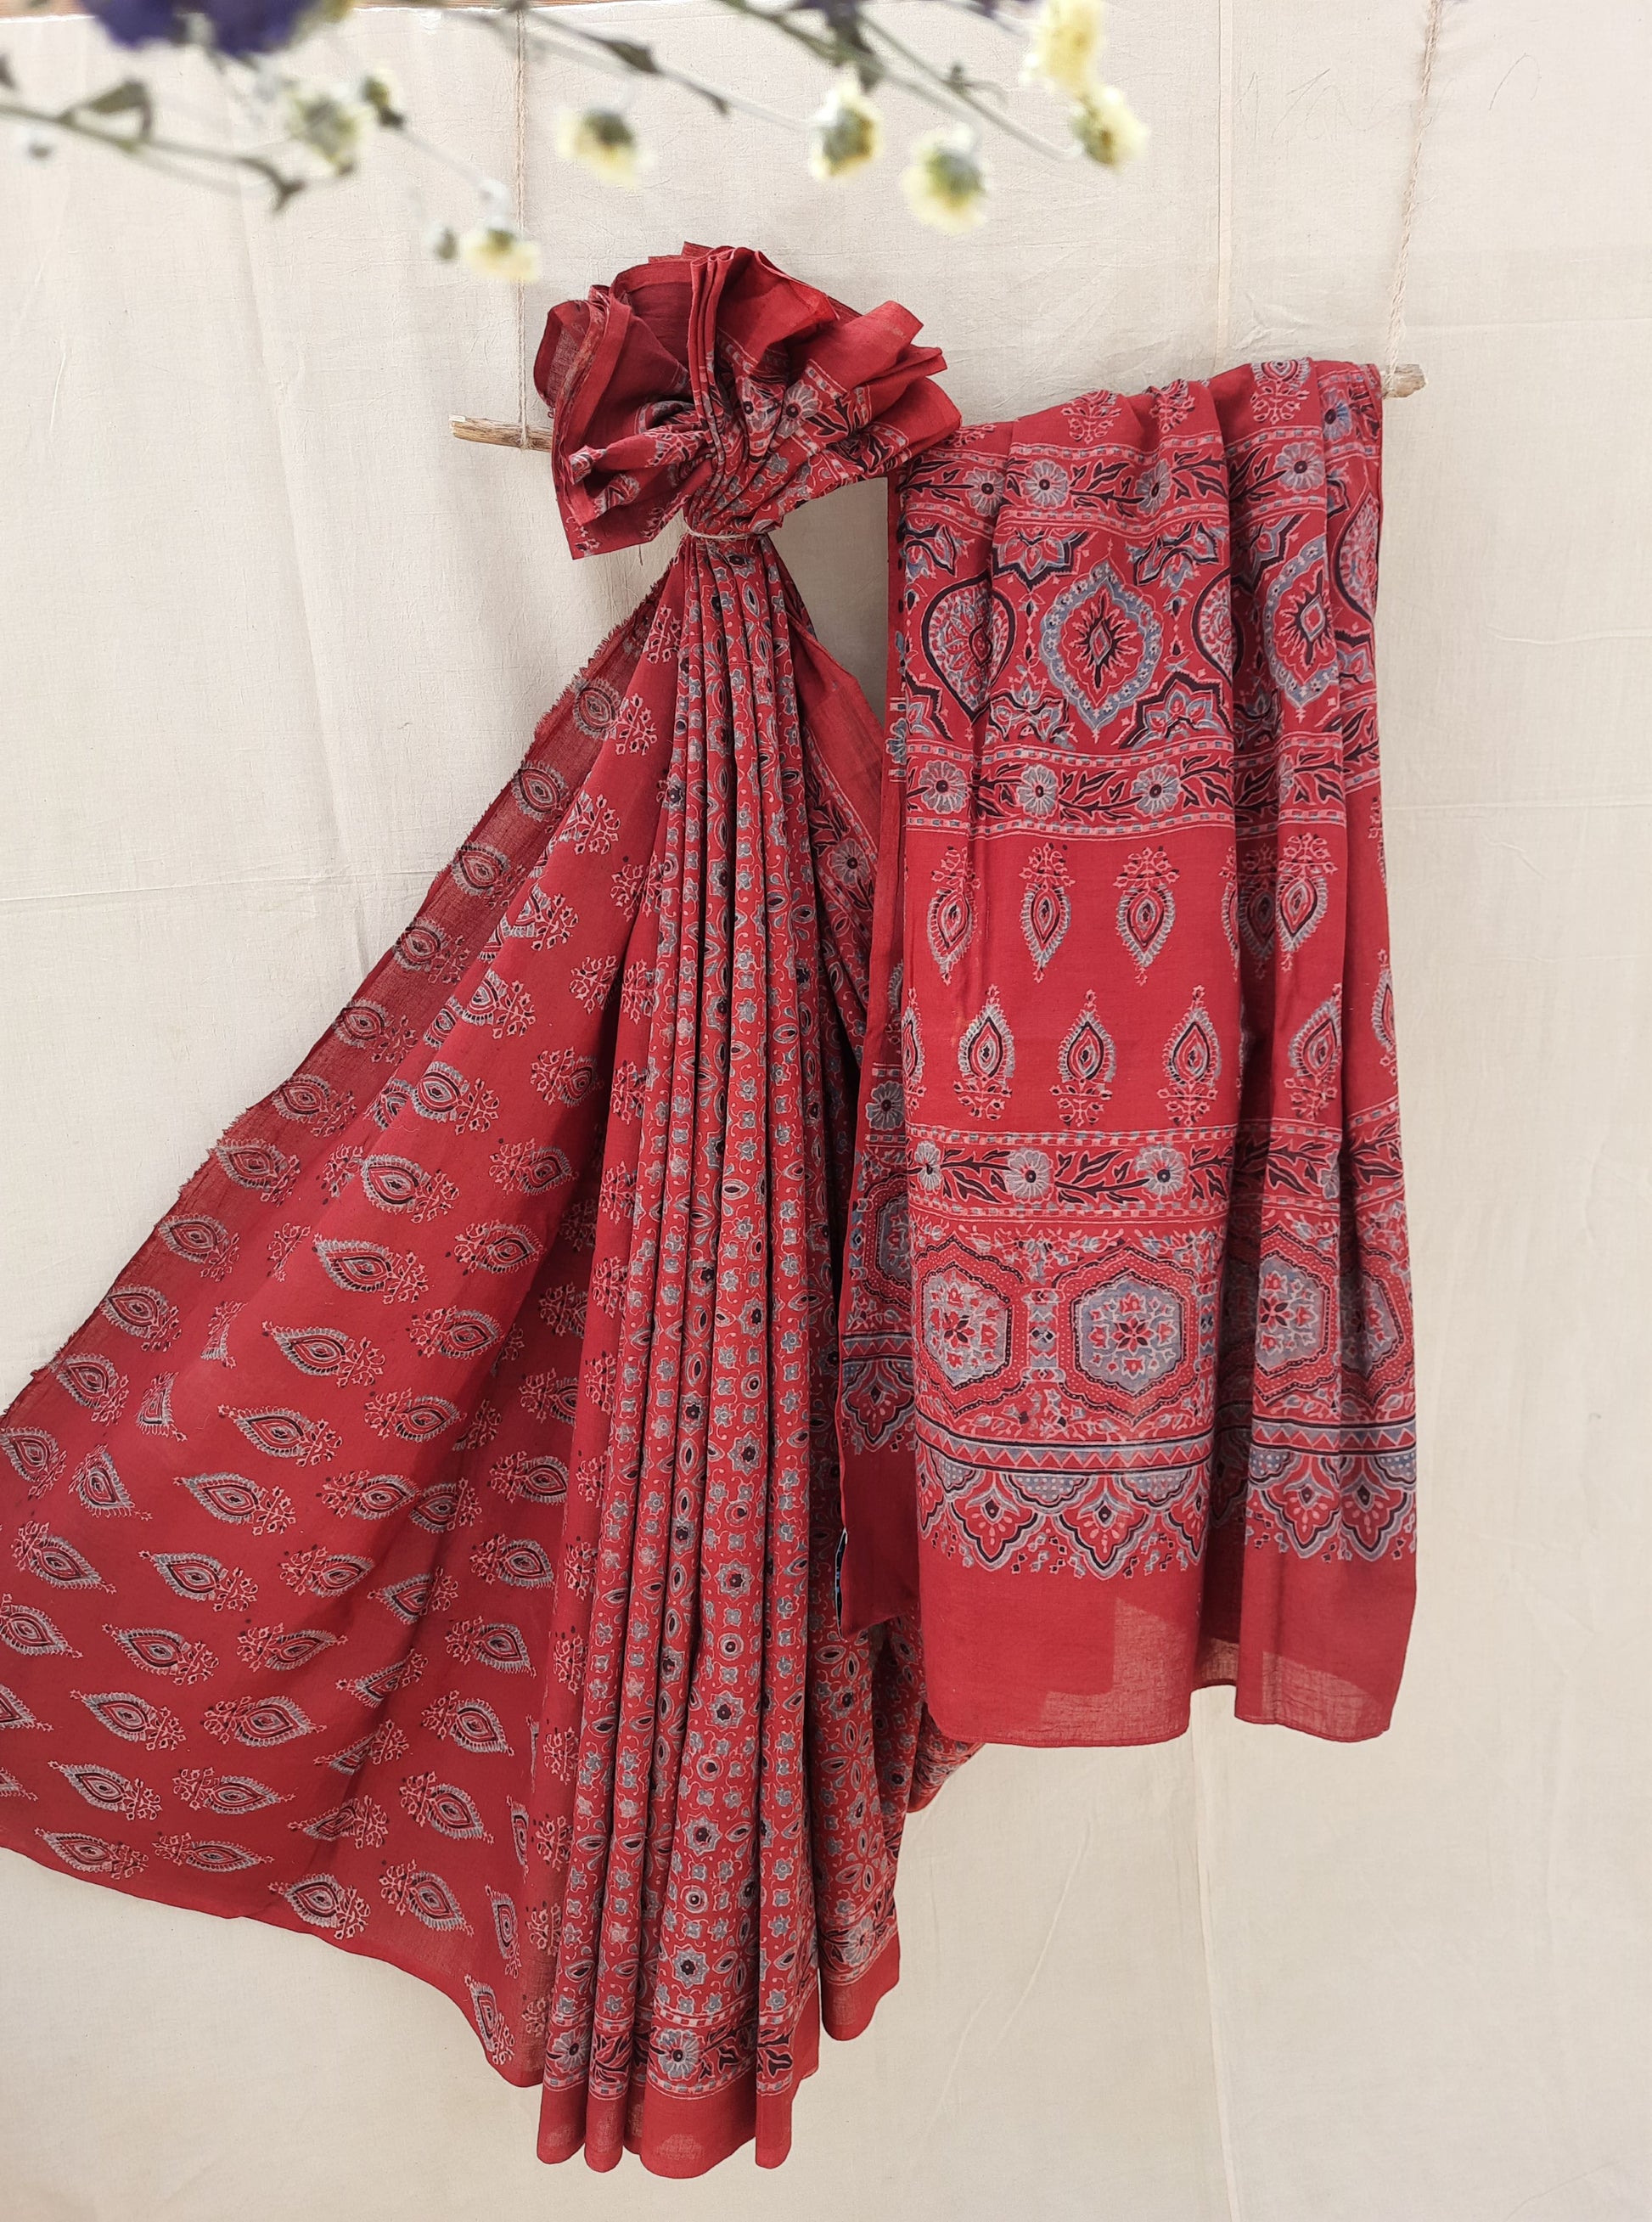 Madder red ajrakh saree, Ajrakh hand block print cotton saree, Madder red ajrakh prints sari